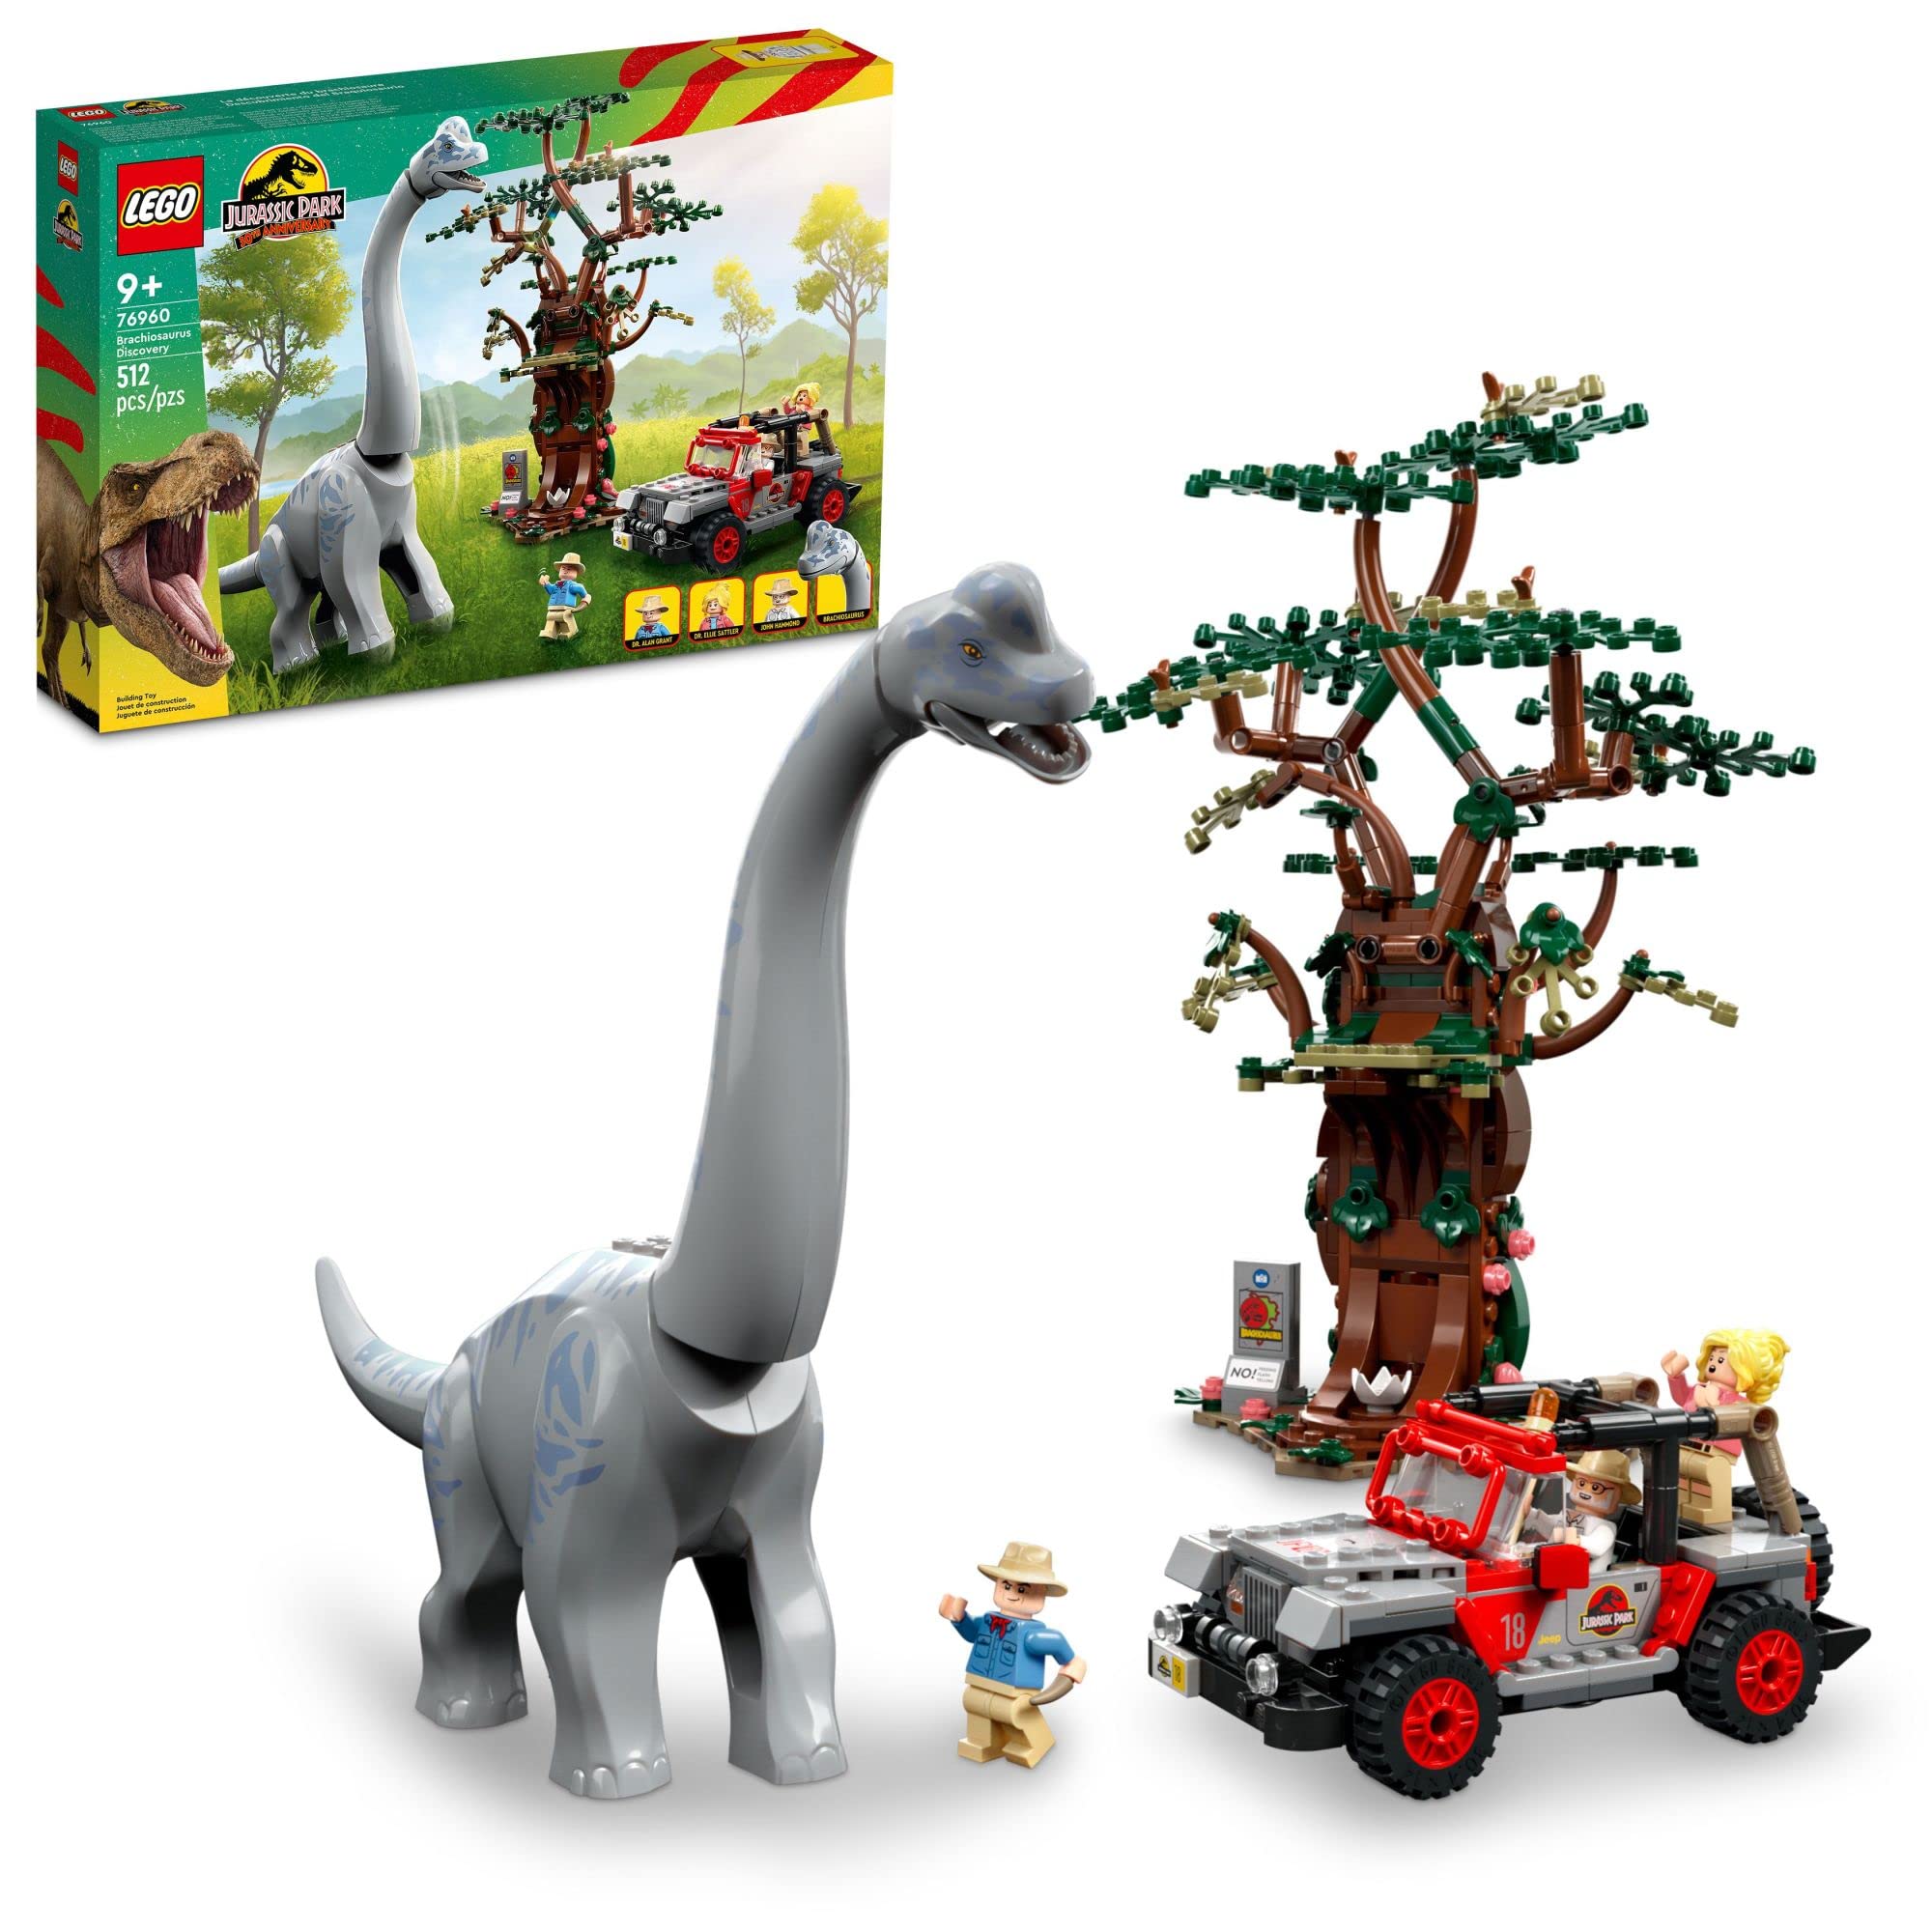 LEGO 侏罗纪世界腕龙探索 76960 侏罗纪公园 30 周年恐龙玩具；以大型恐龙人物和积木搭建的吉普牧马人...